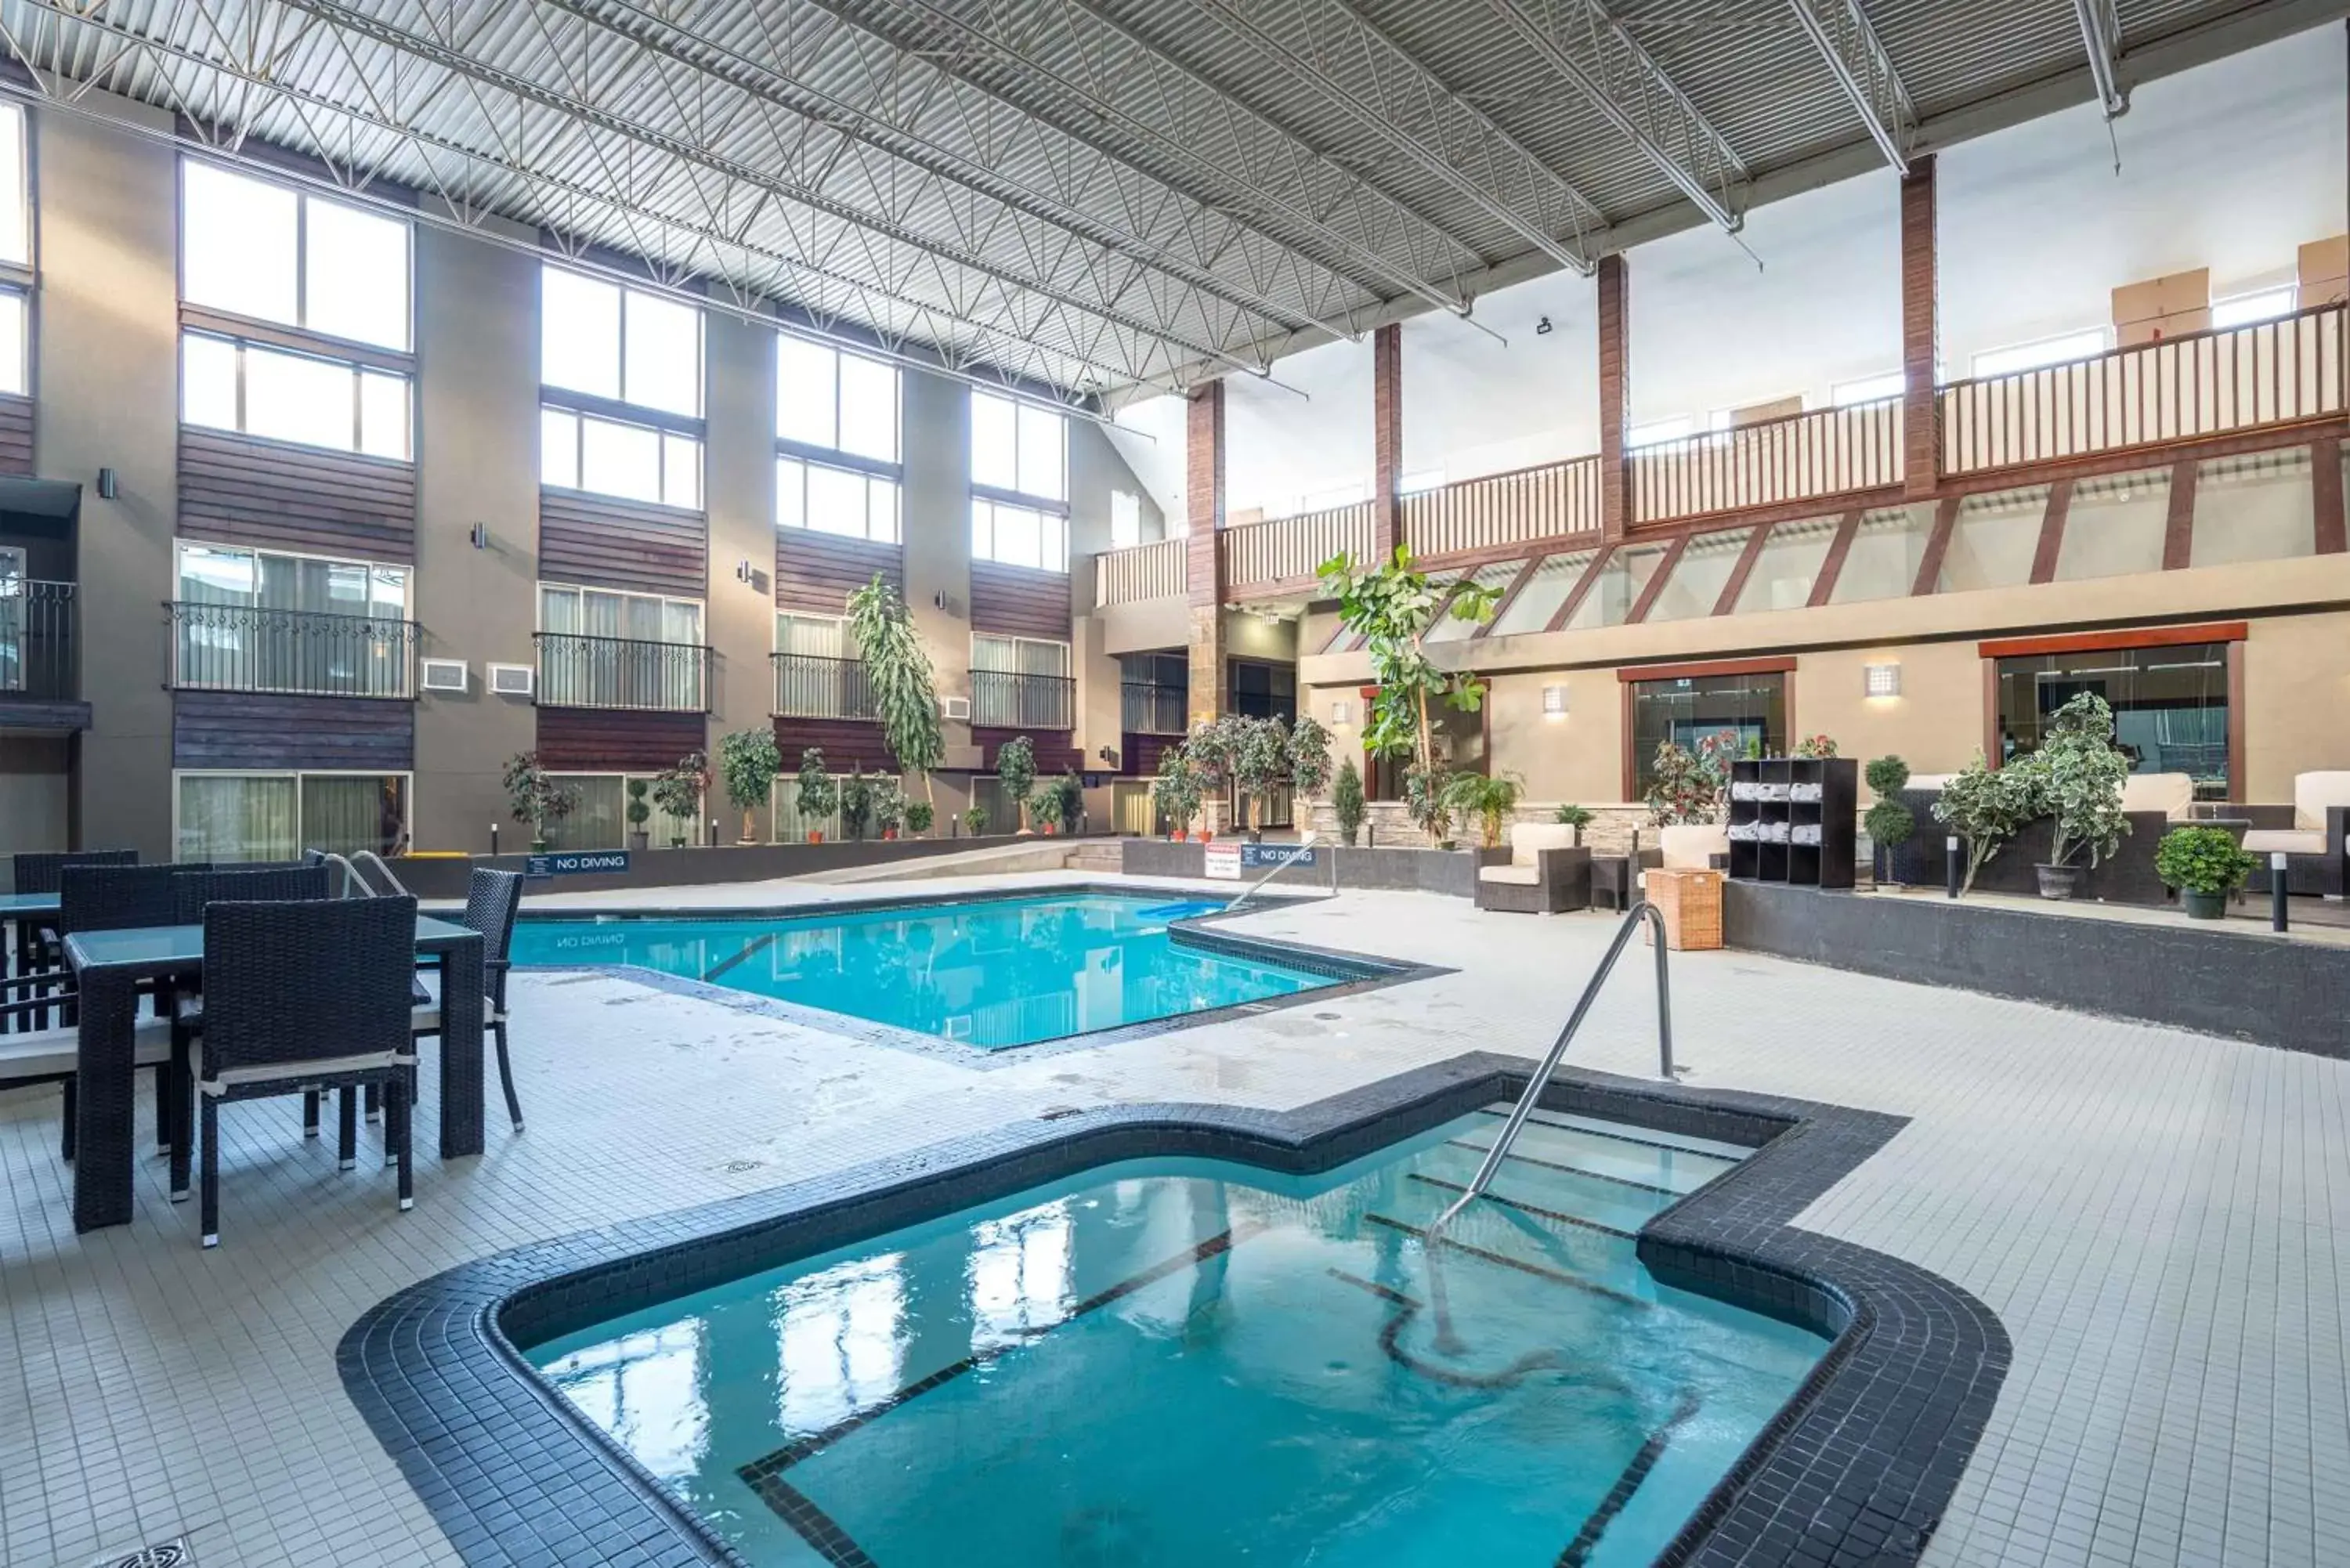 Swimming Pool in Sandman Hotel Edmonton West